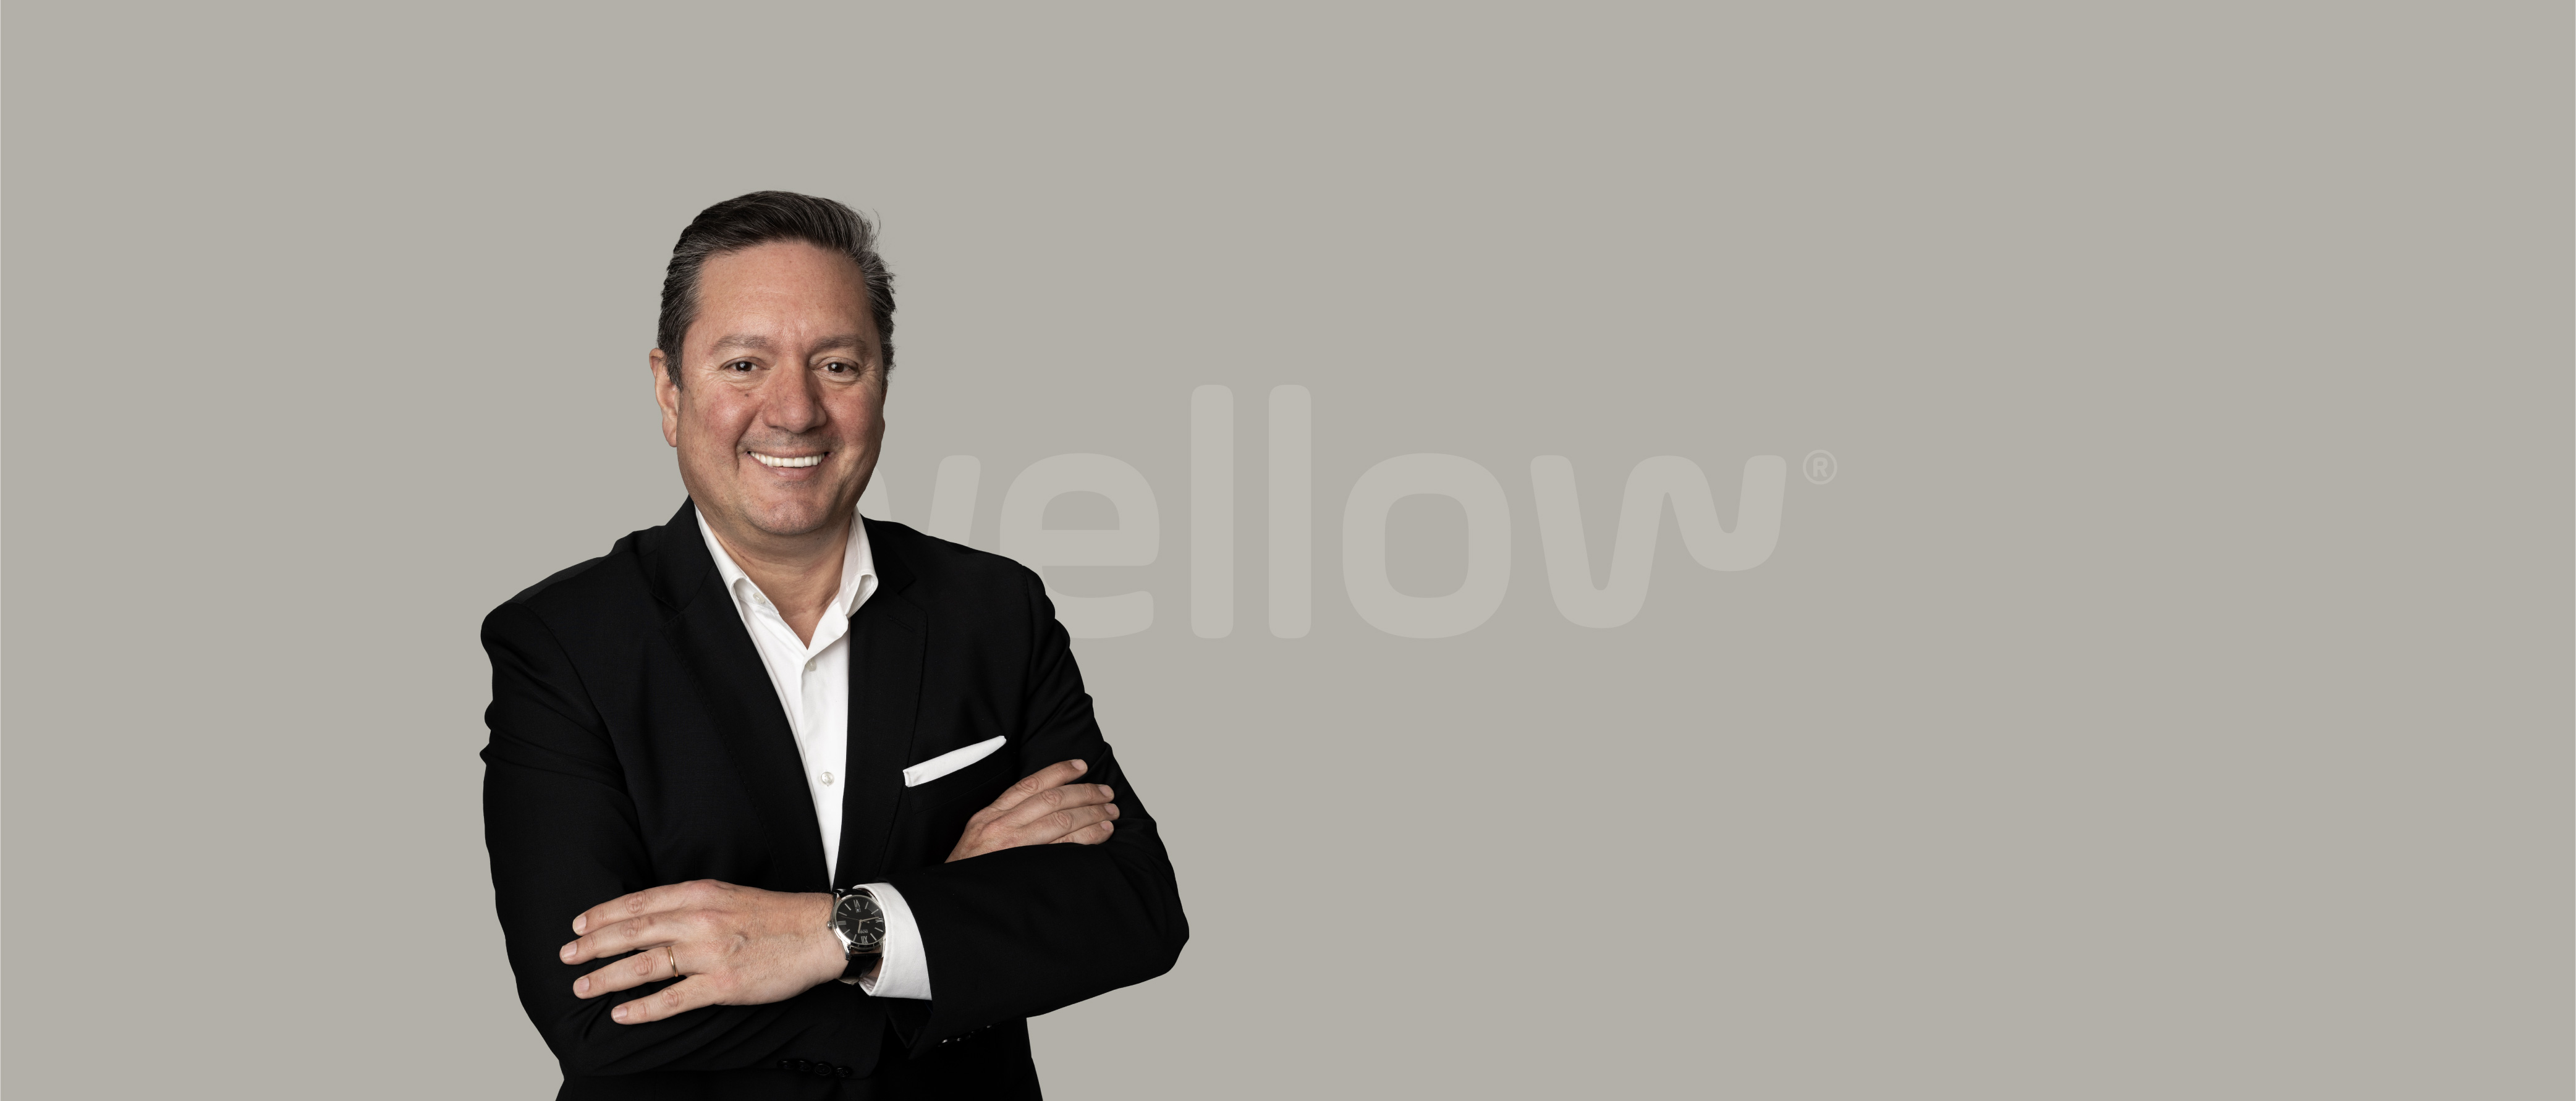 Wellow™ Group nomeia Rui Fiolhais para Administrador Executivo e Board Member